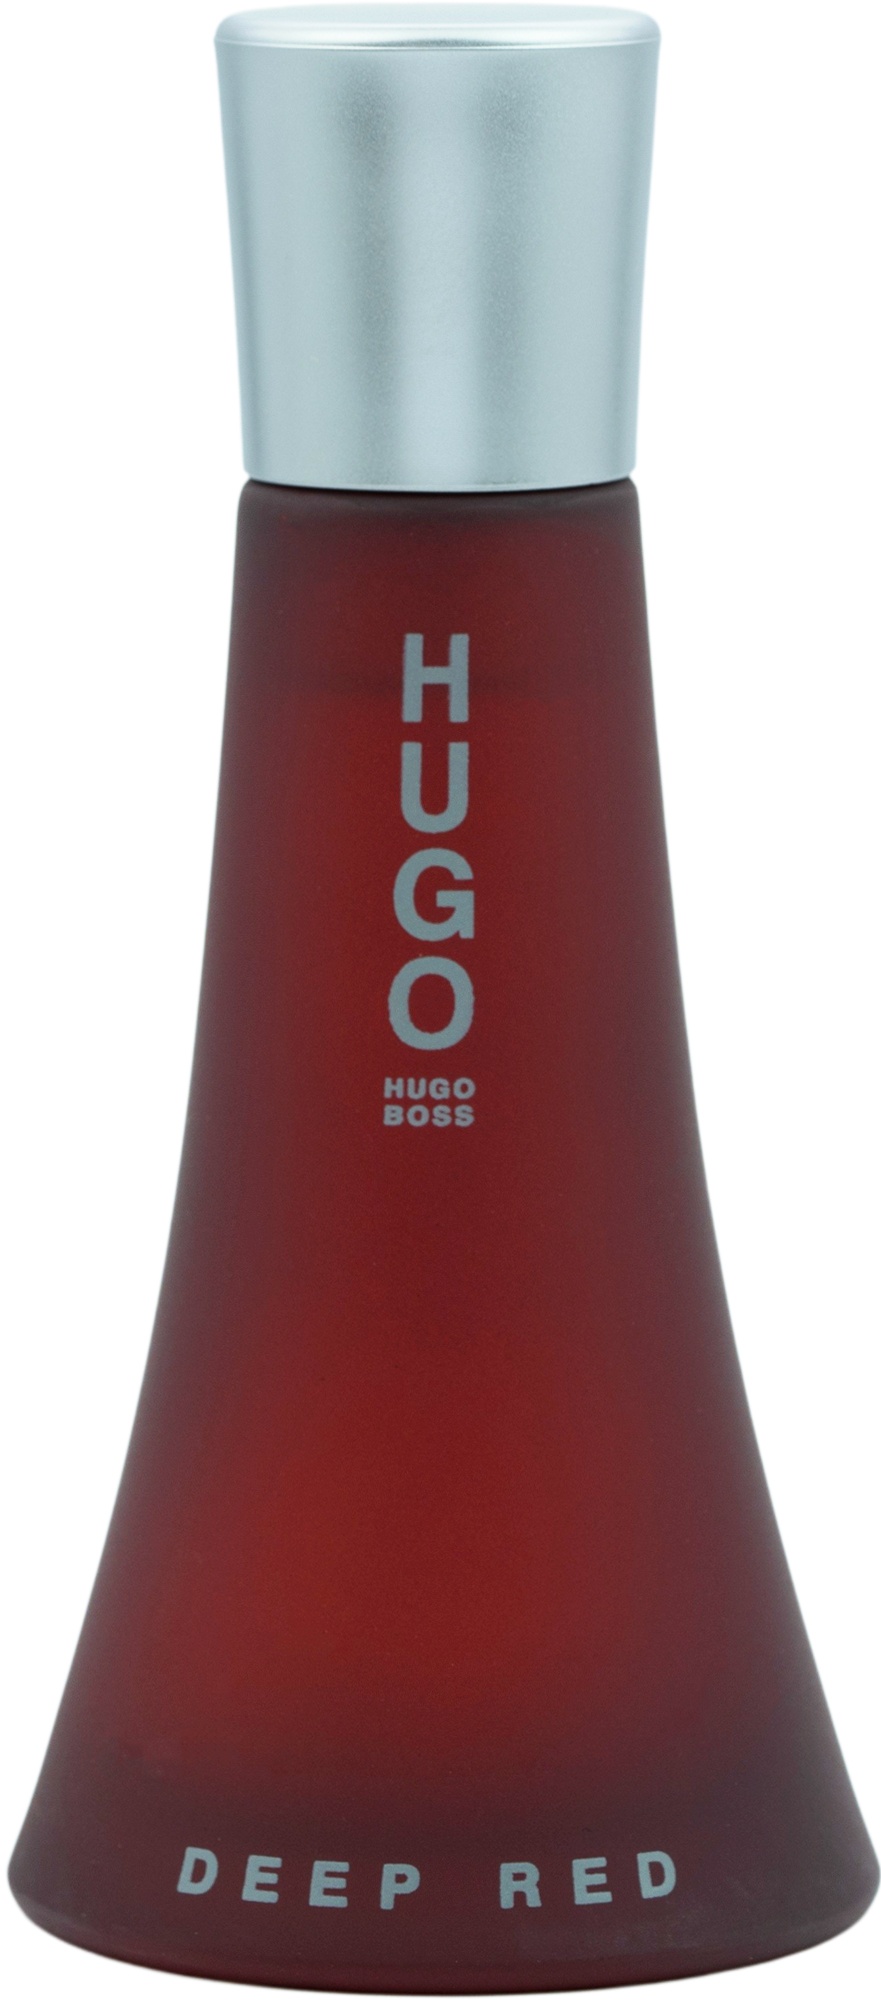 hugo boss deep red 90